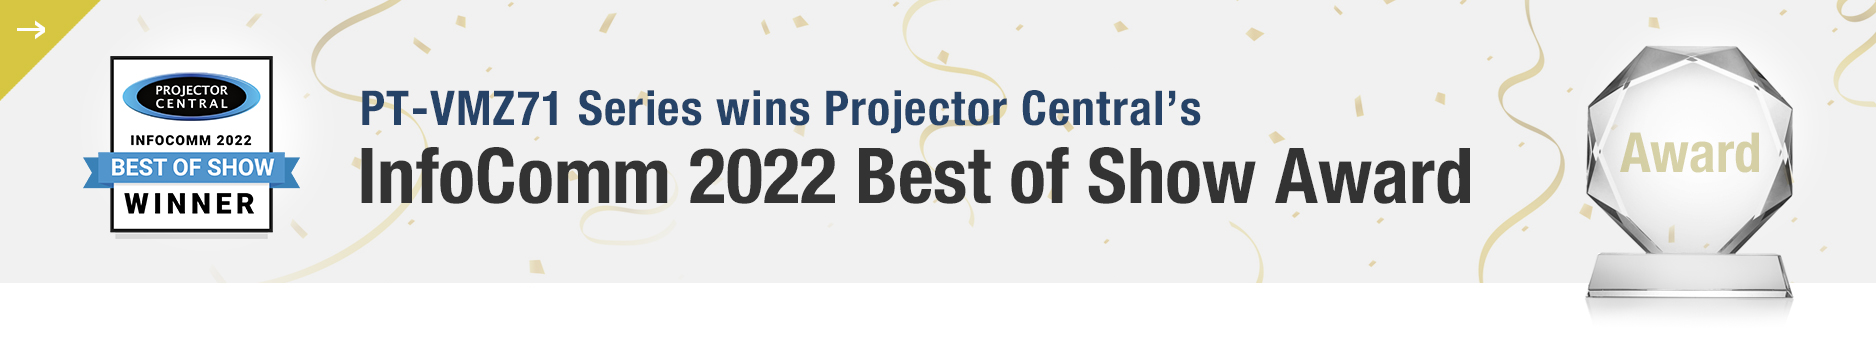 PT-VMZ71 Series wins Projector Central’s InfoComm 2022 Best of Show Award